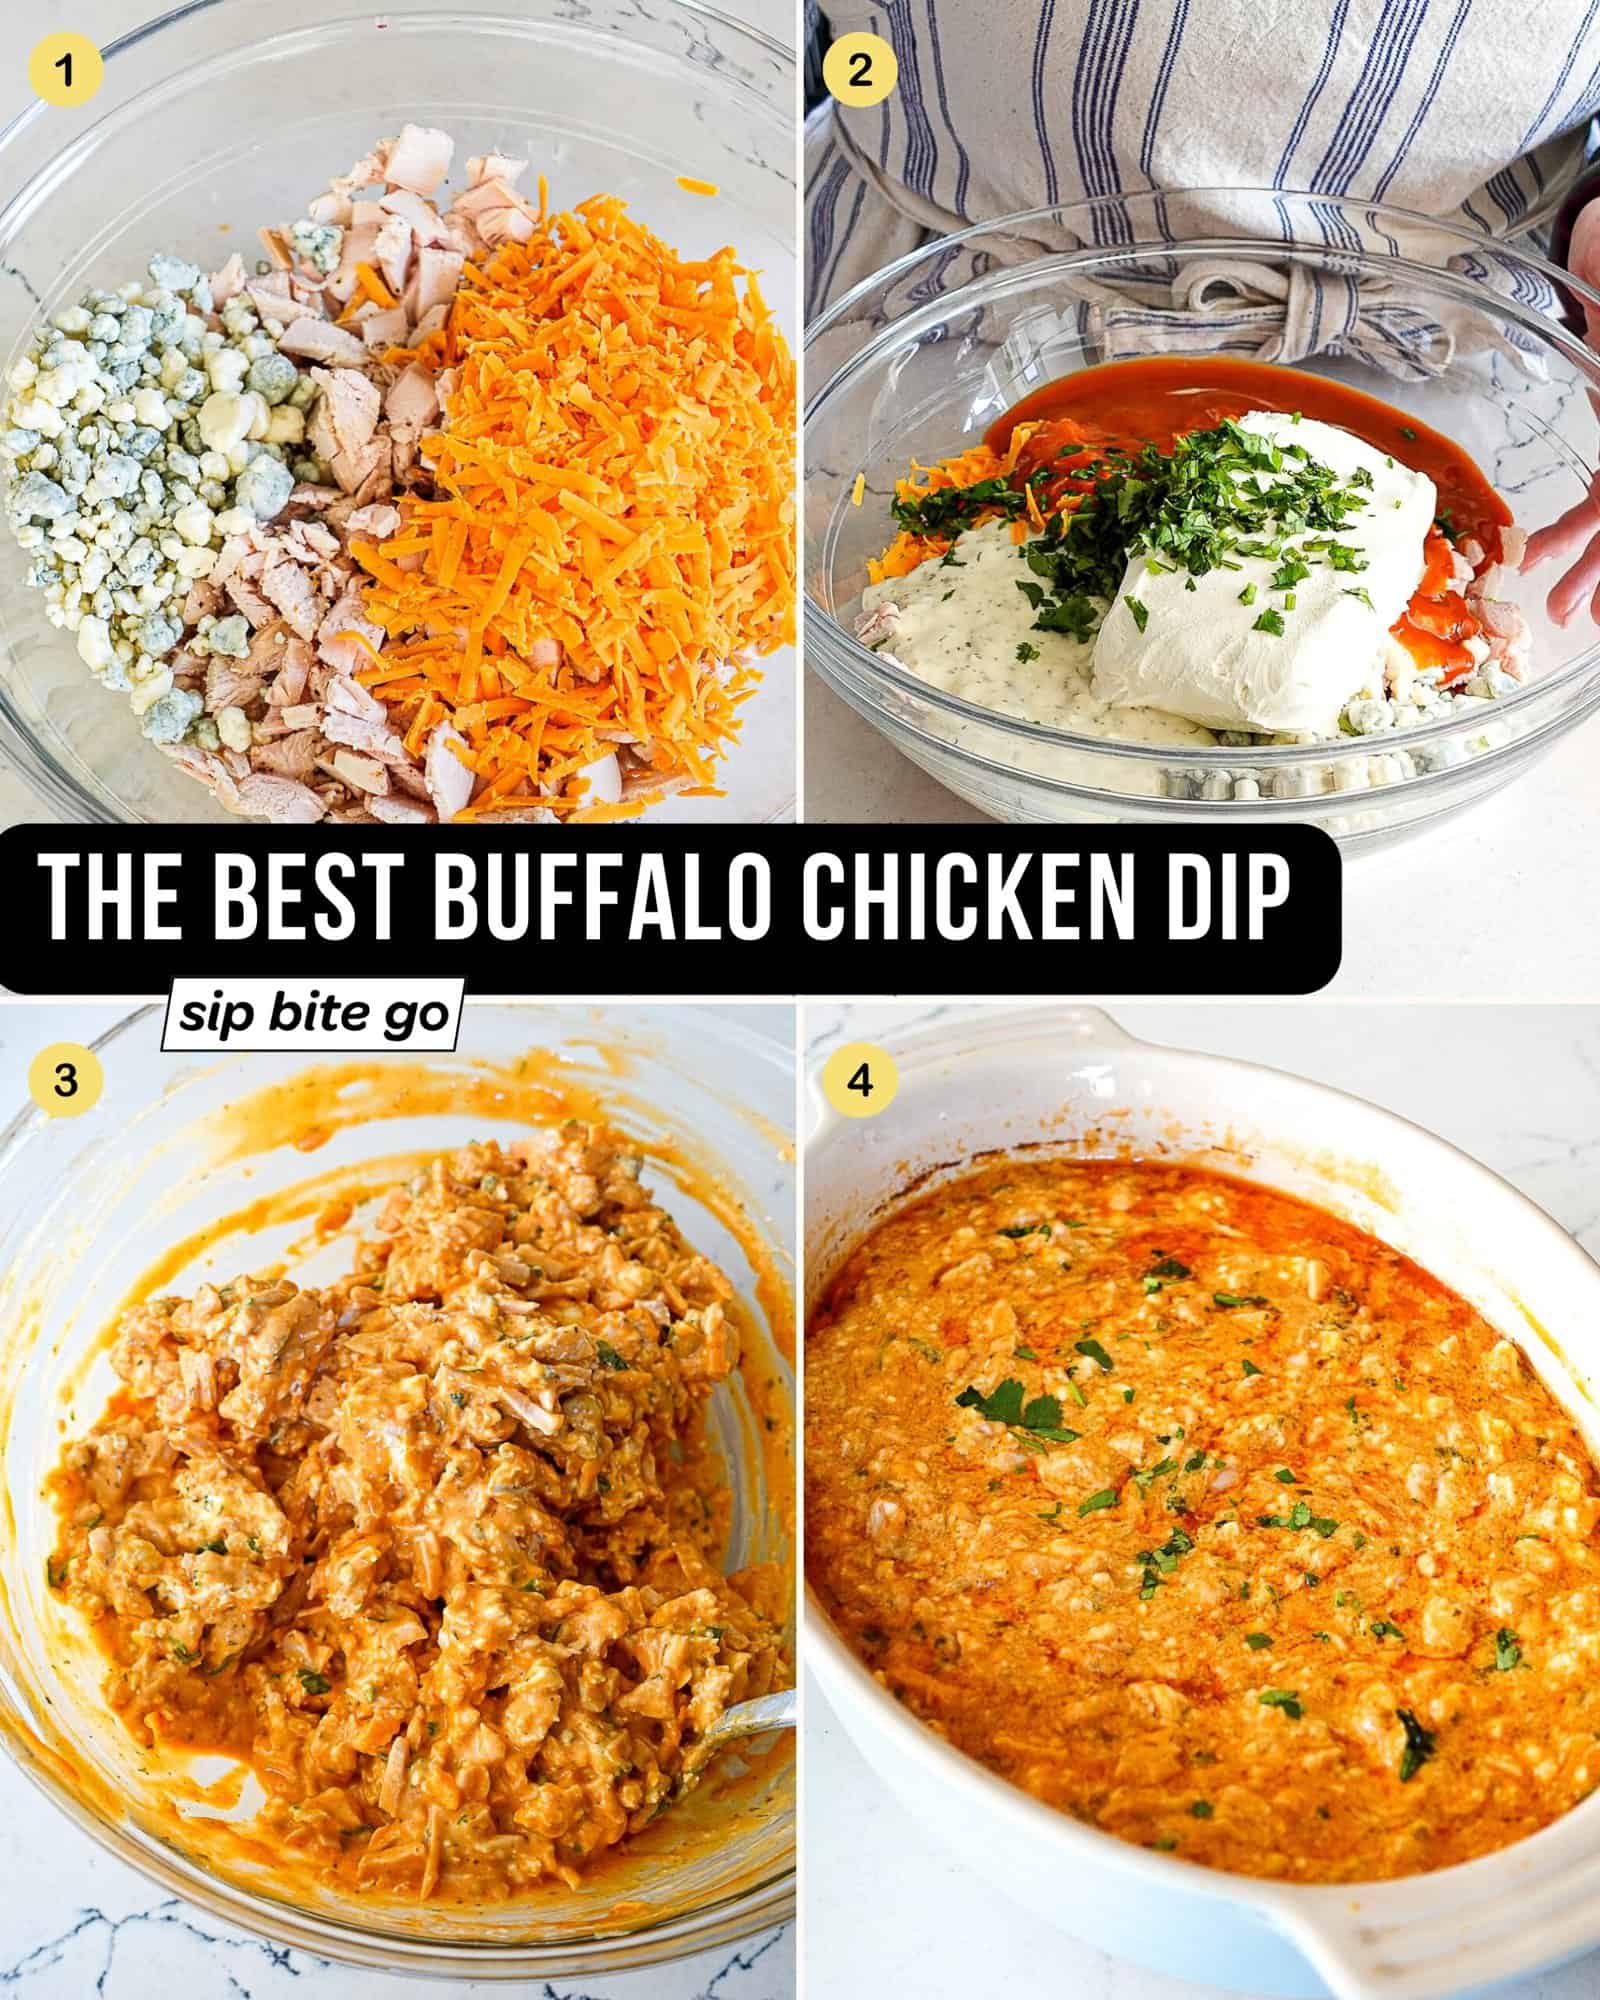 Recipe steps to make homemade buffalo chicken dip